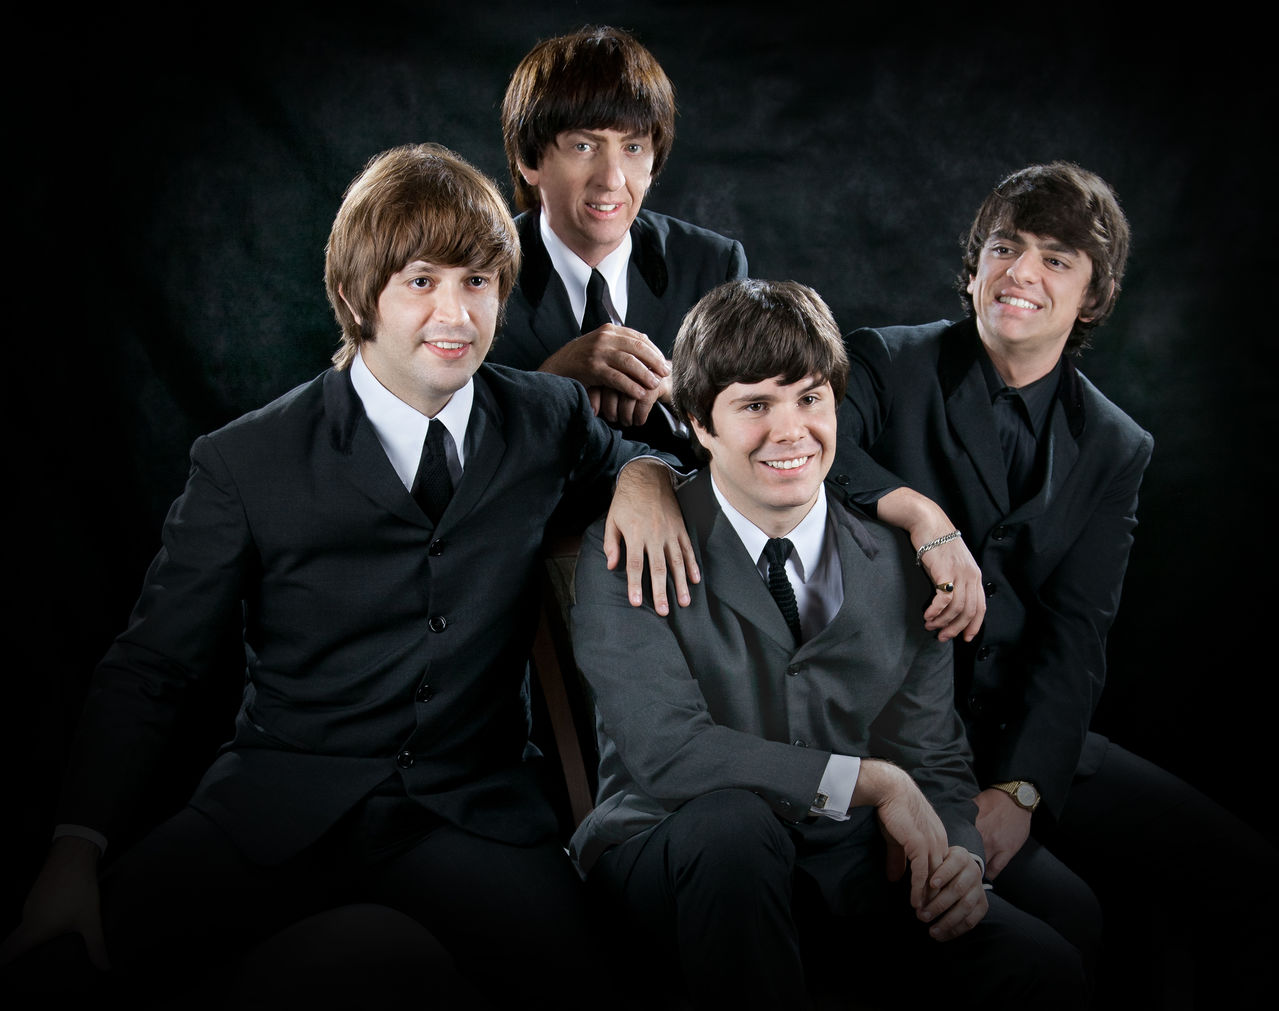 Arte: Beatles Abbey Road - A Explosão da Beatlemania 